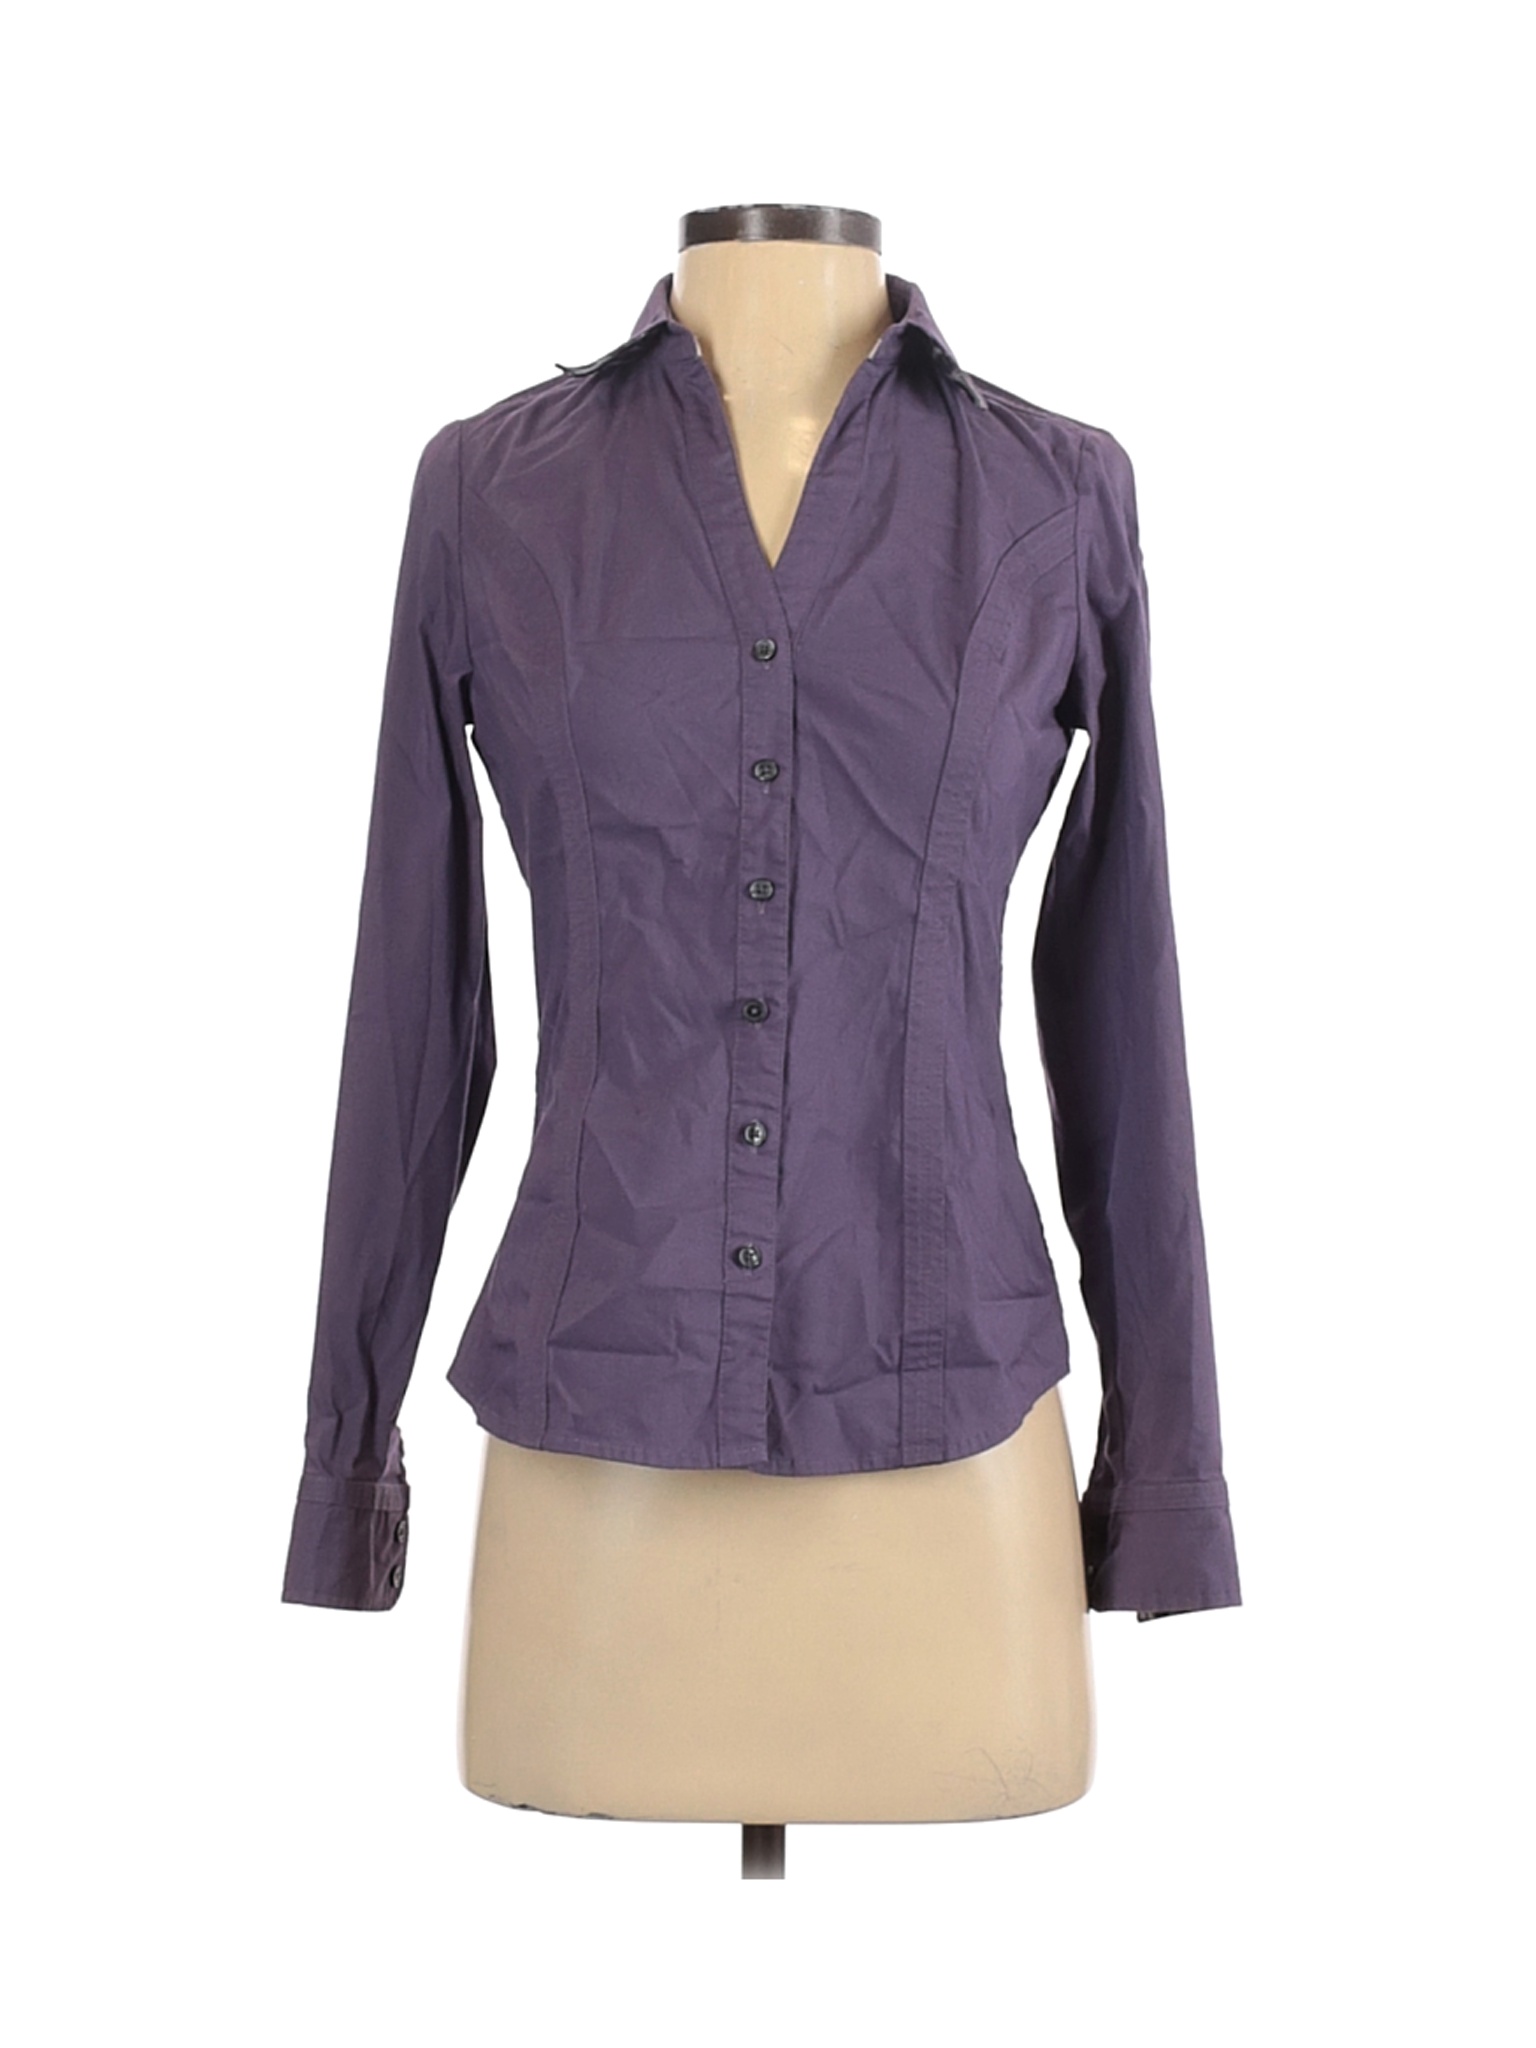 Express Women Purple Long Sleeve Button-Down Shirt XS | eBay